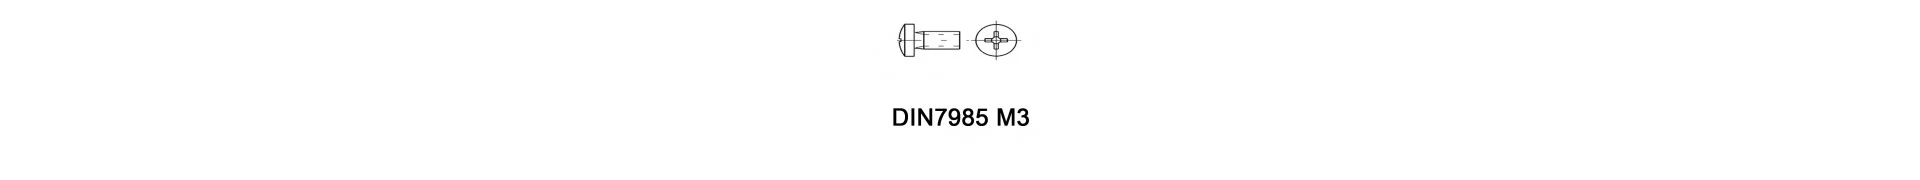 DIN7985 M3